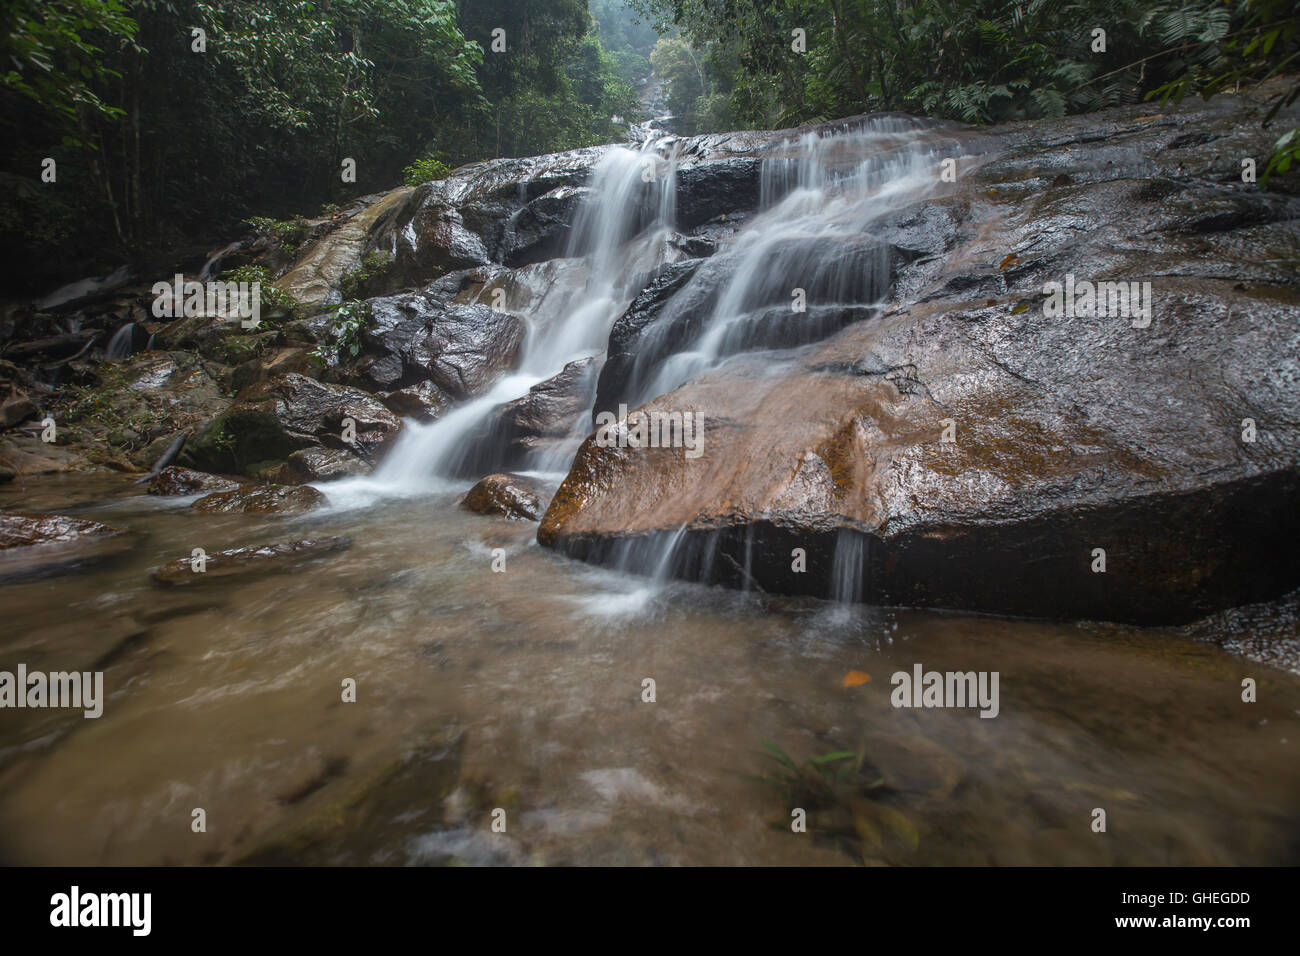 Nature beauty of rain forest waterfalls. Stock Photo